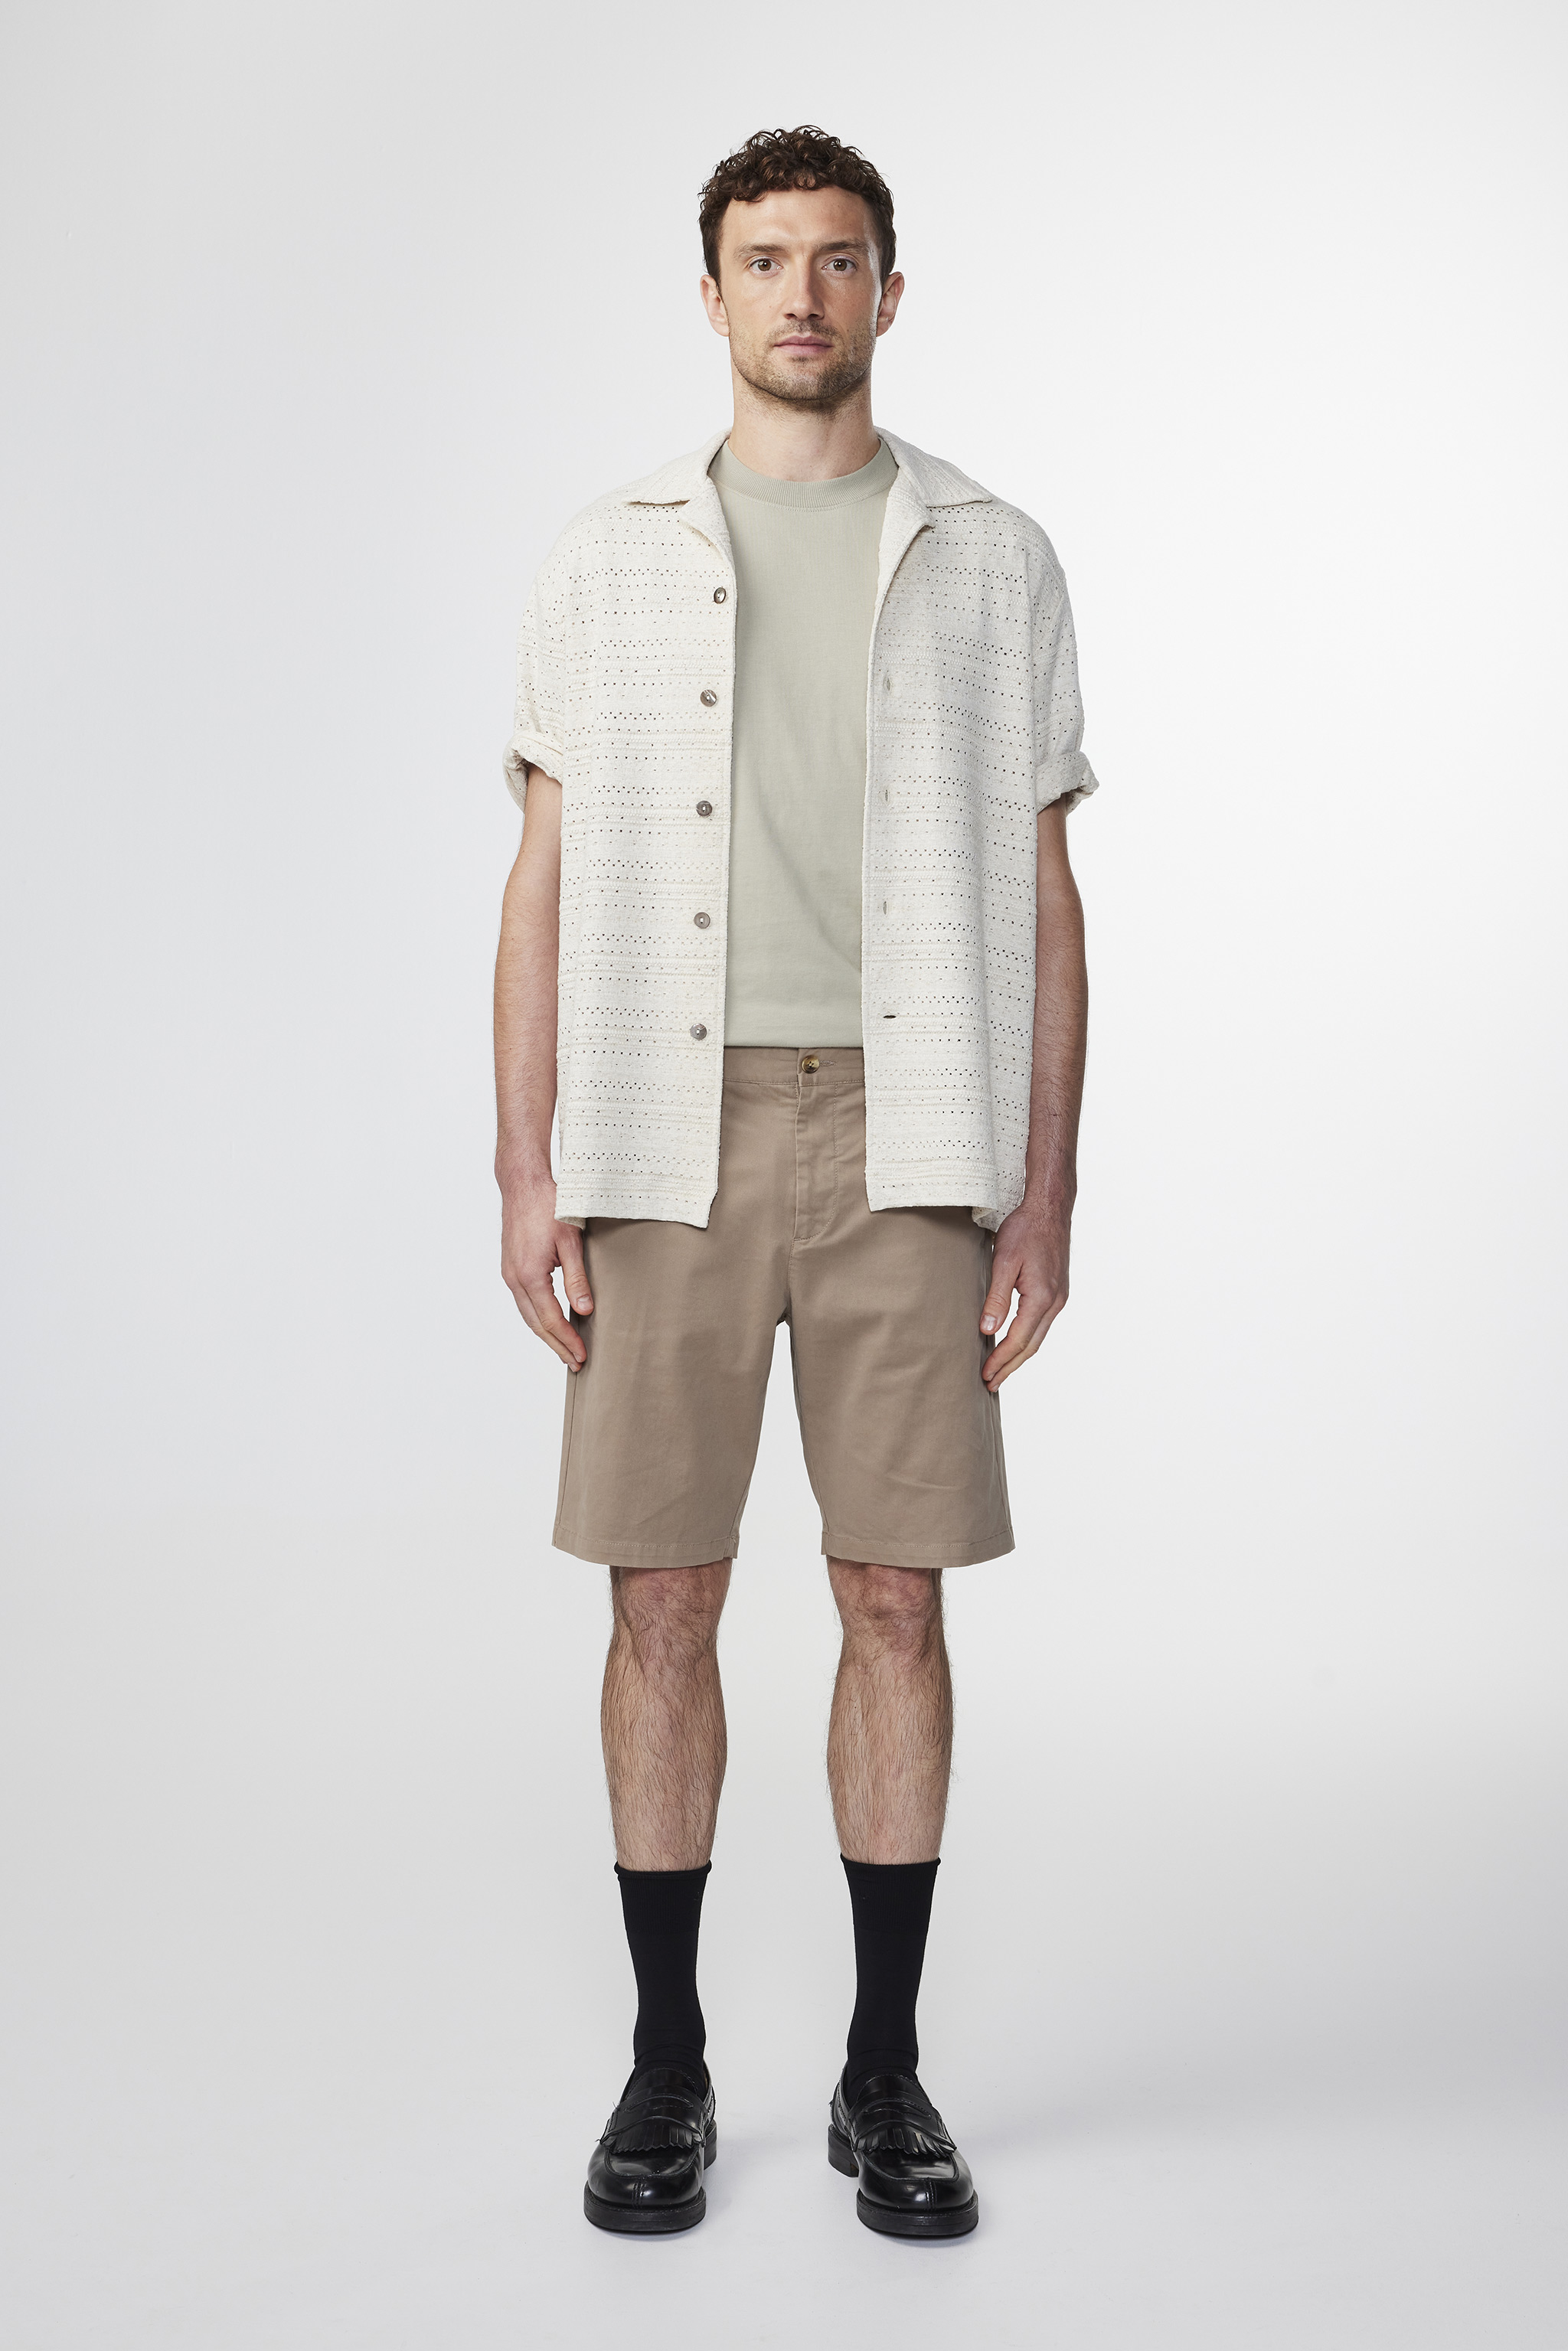 Julio 3378 men's shirt - White - Buy online at NN.07®